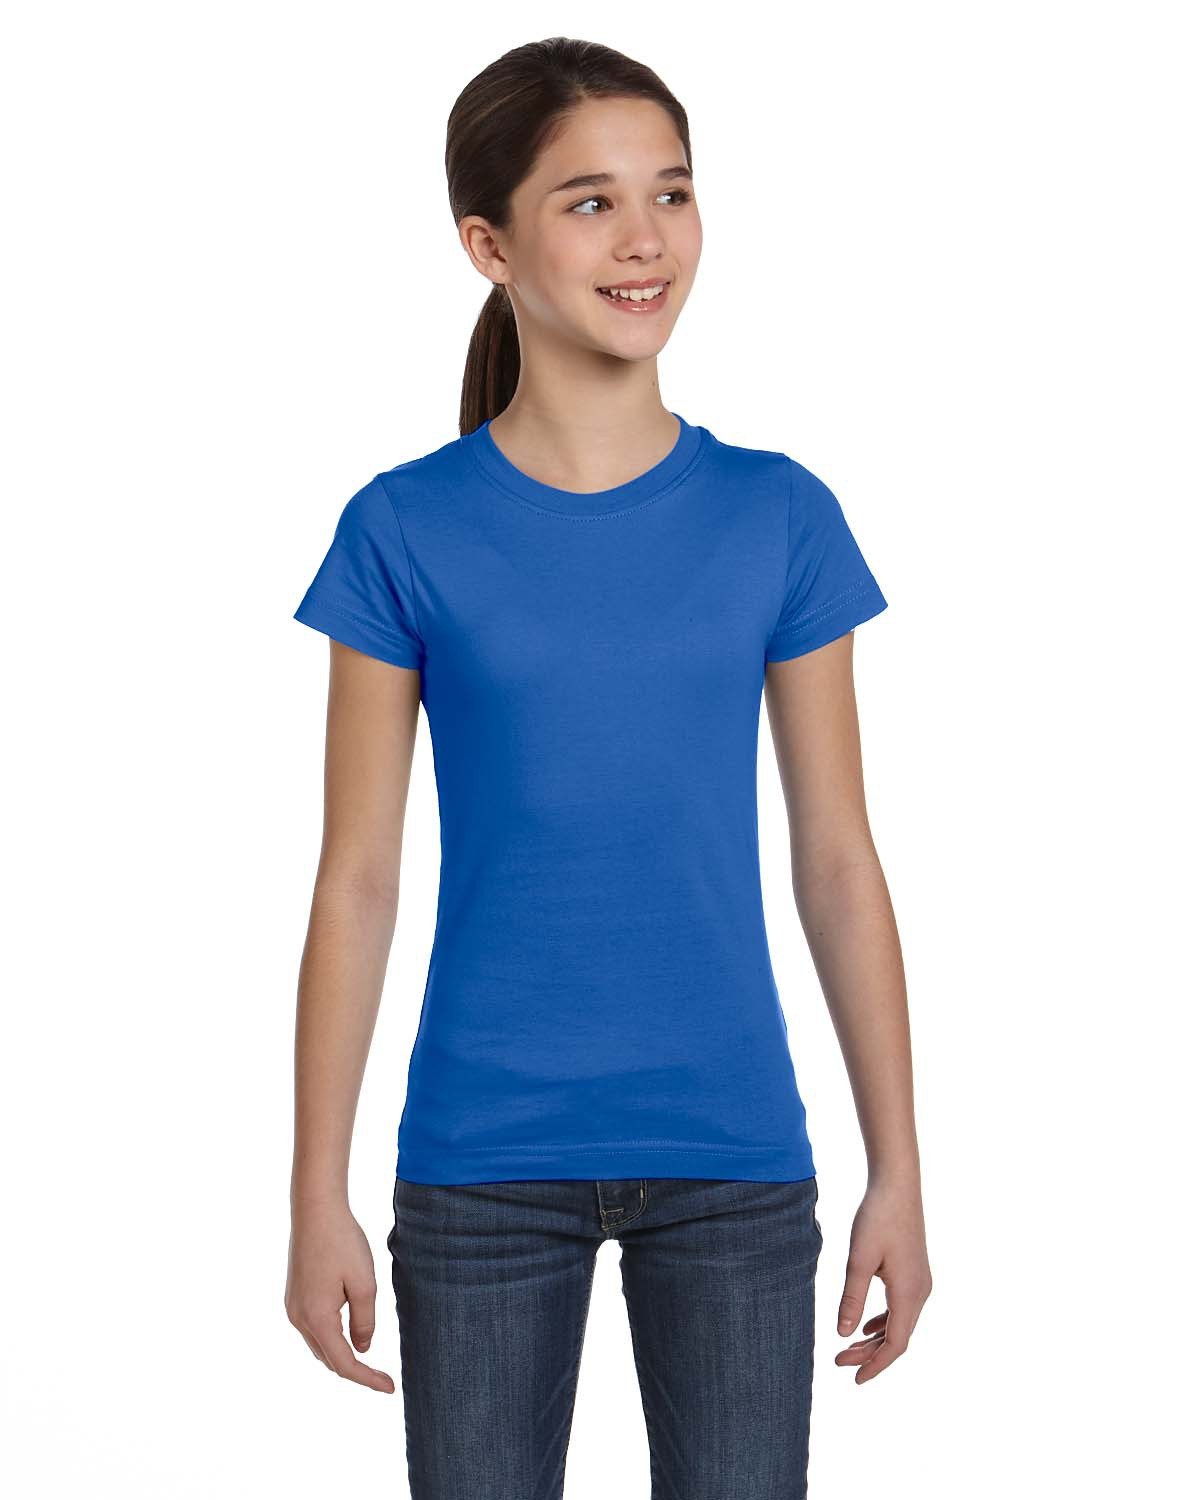 Personalised T-Shirt Girl Kid